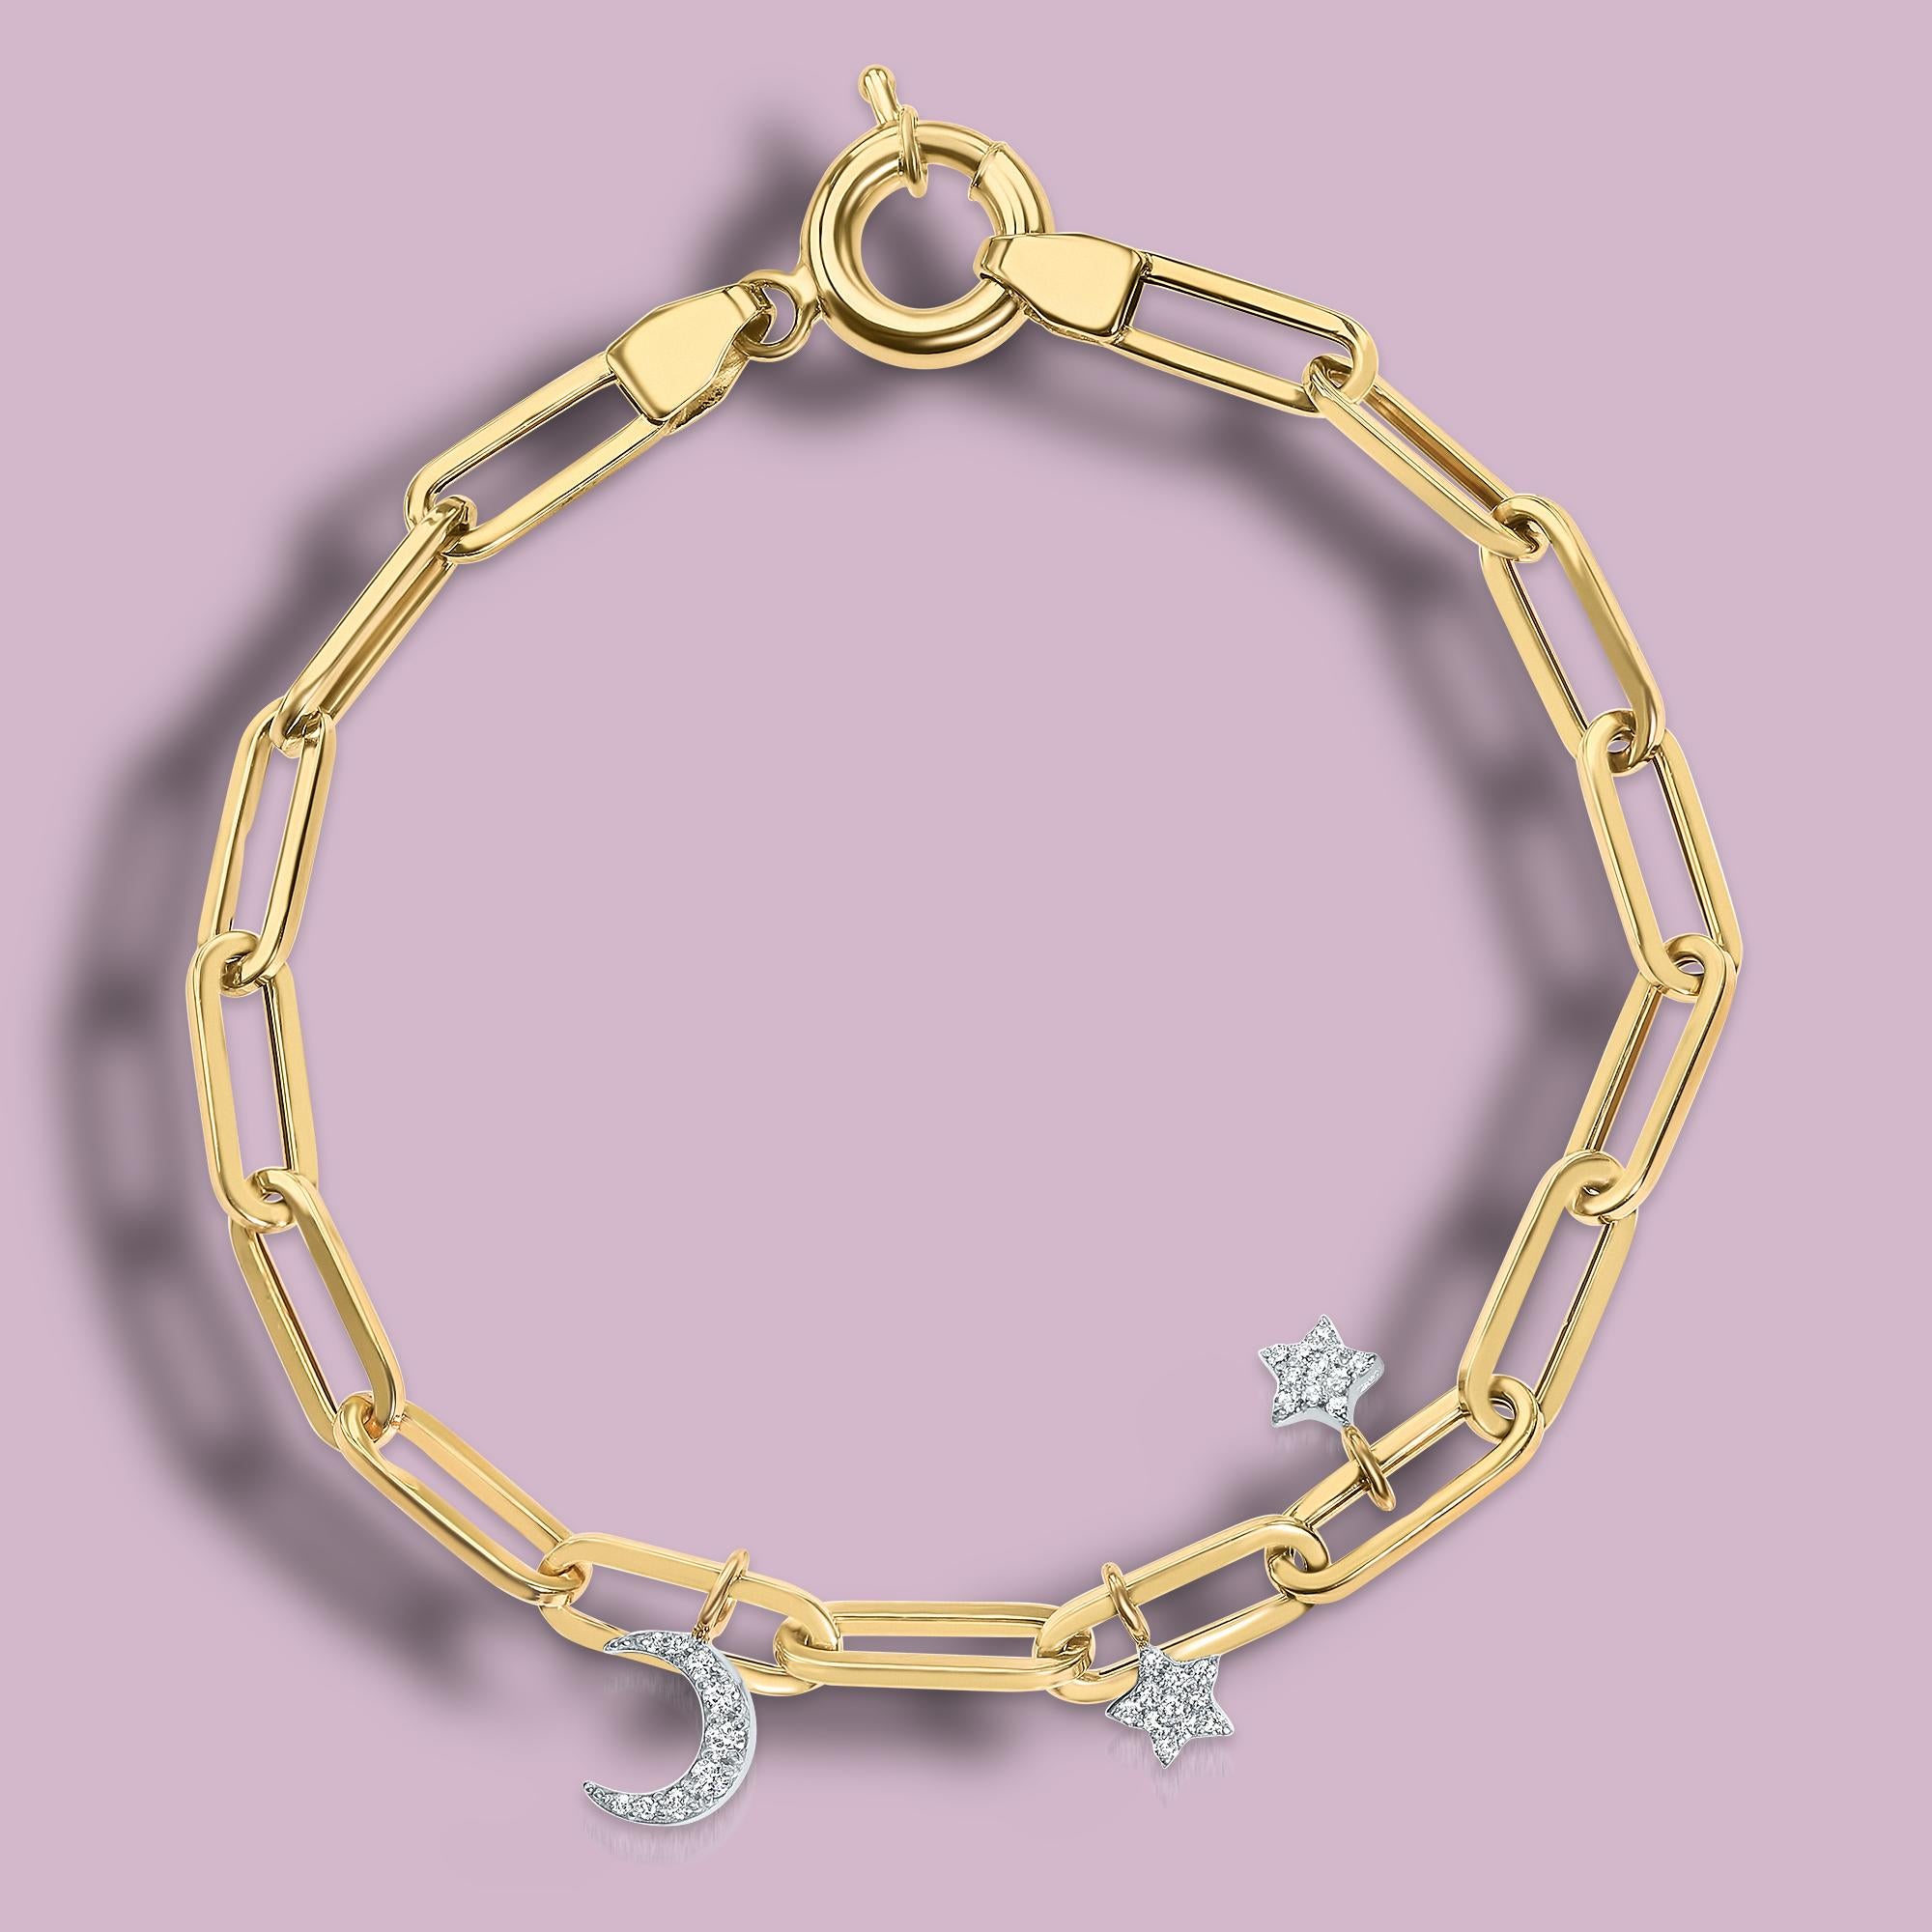 costco paper clip bracelet